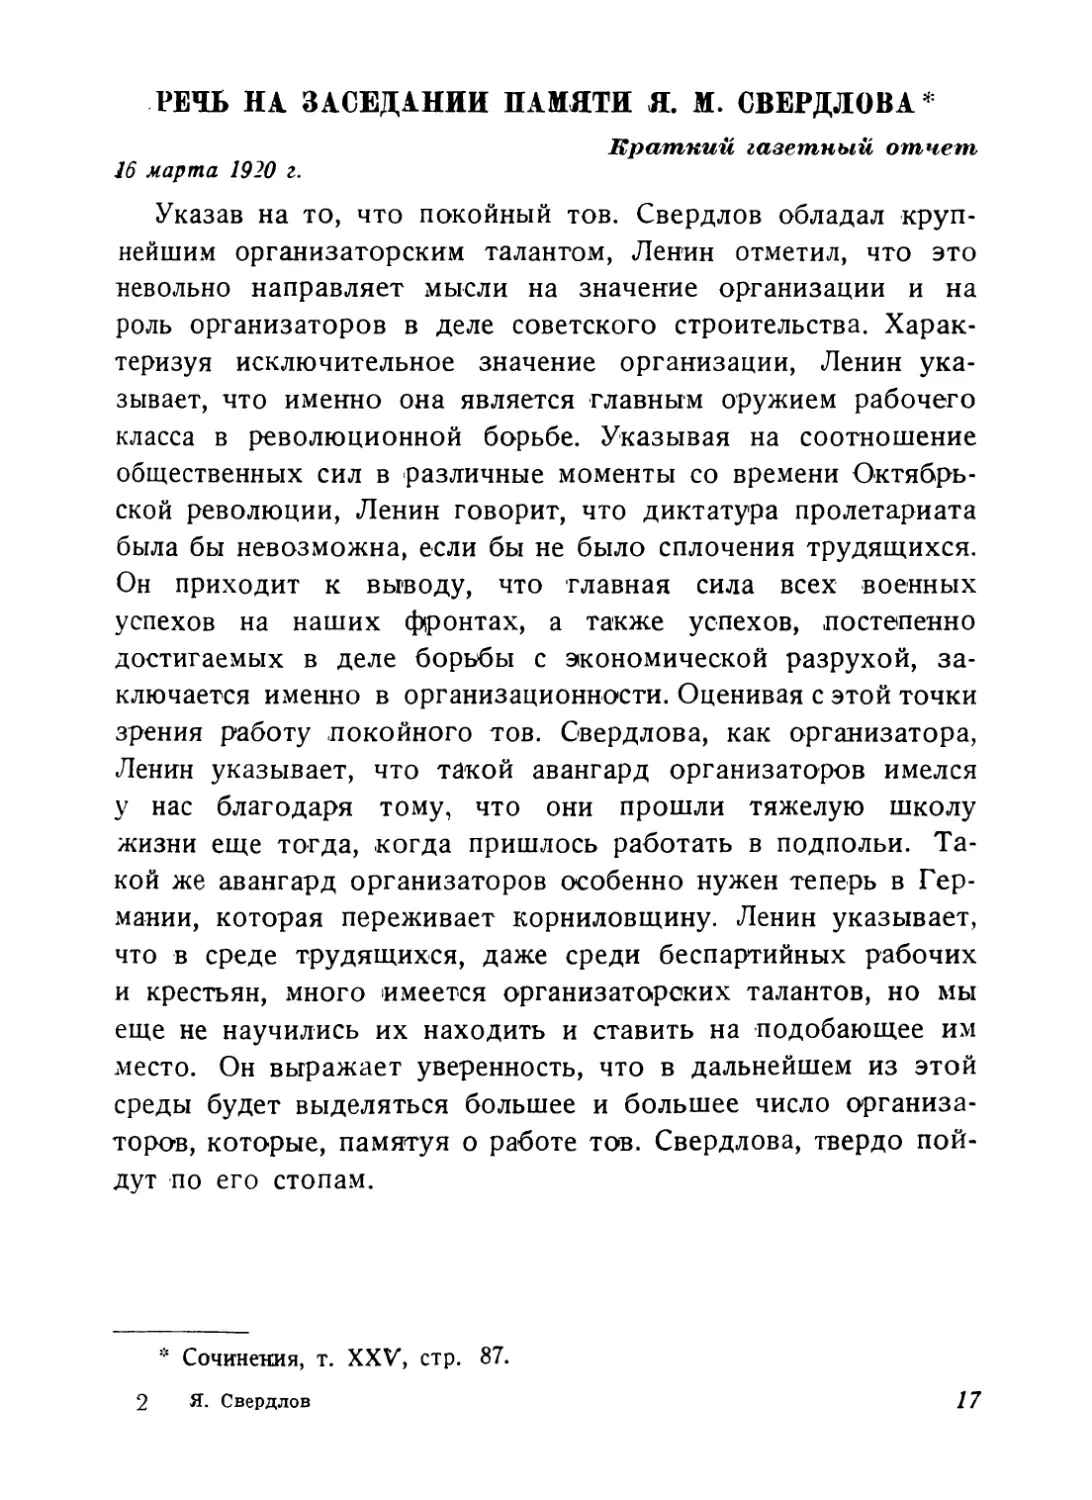 Речь на заседании намети Я. М. Свердлова, 16 марта 1920 г